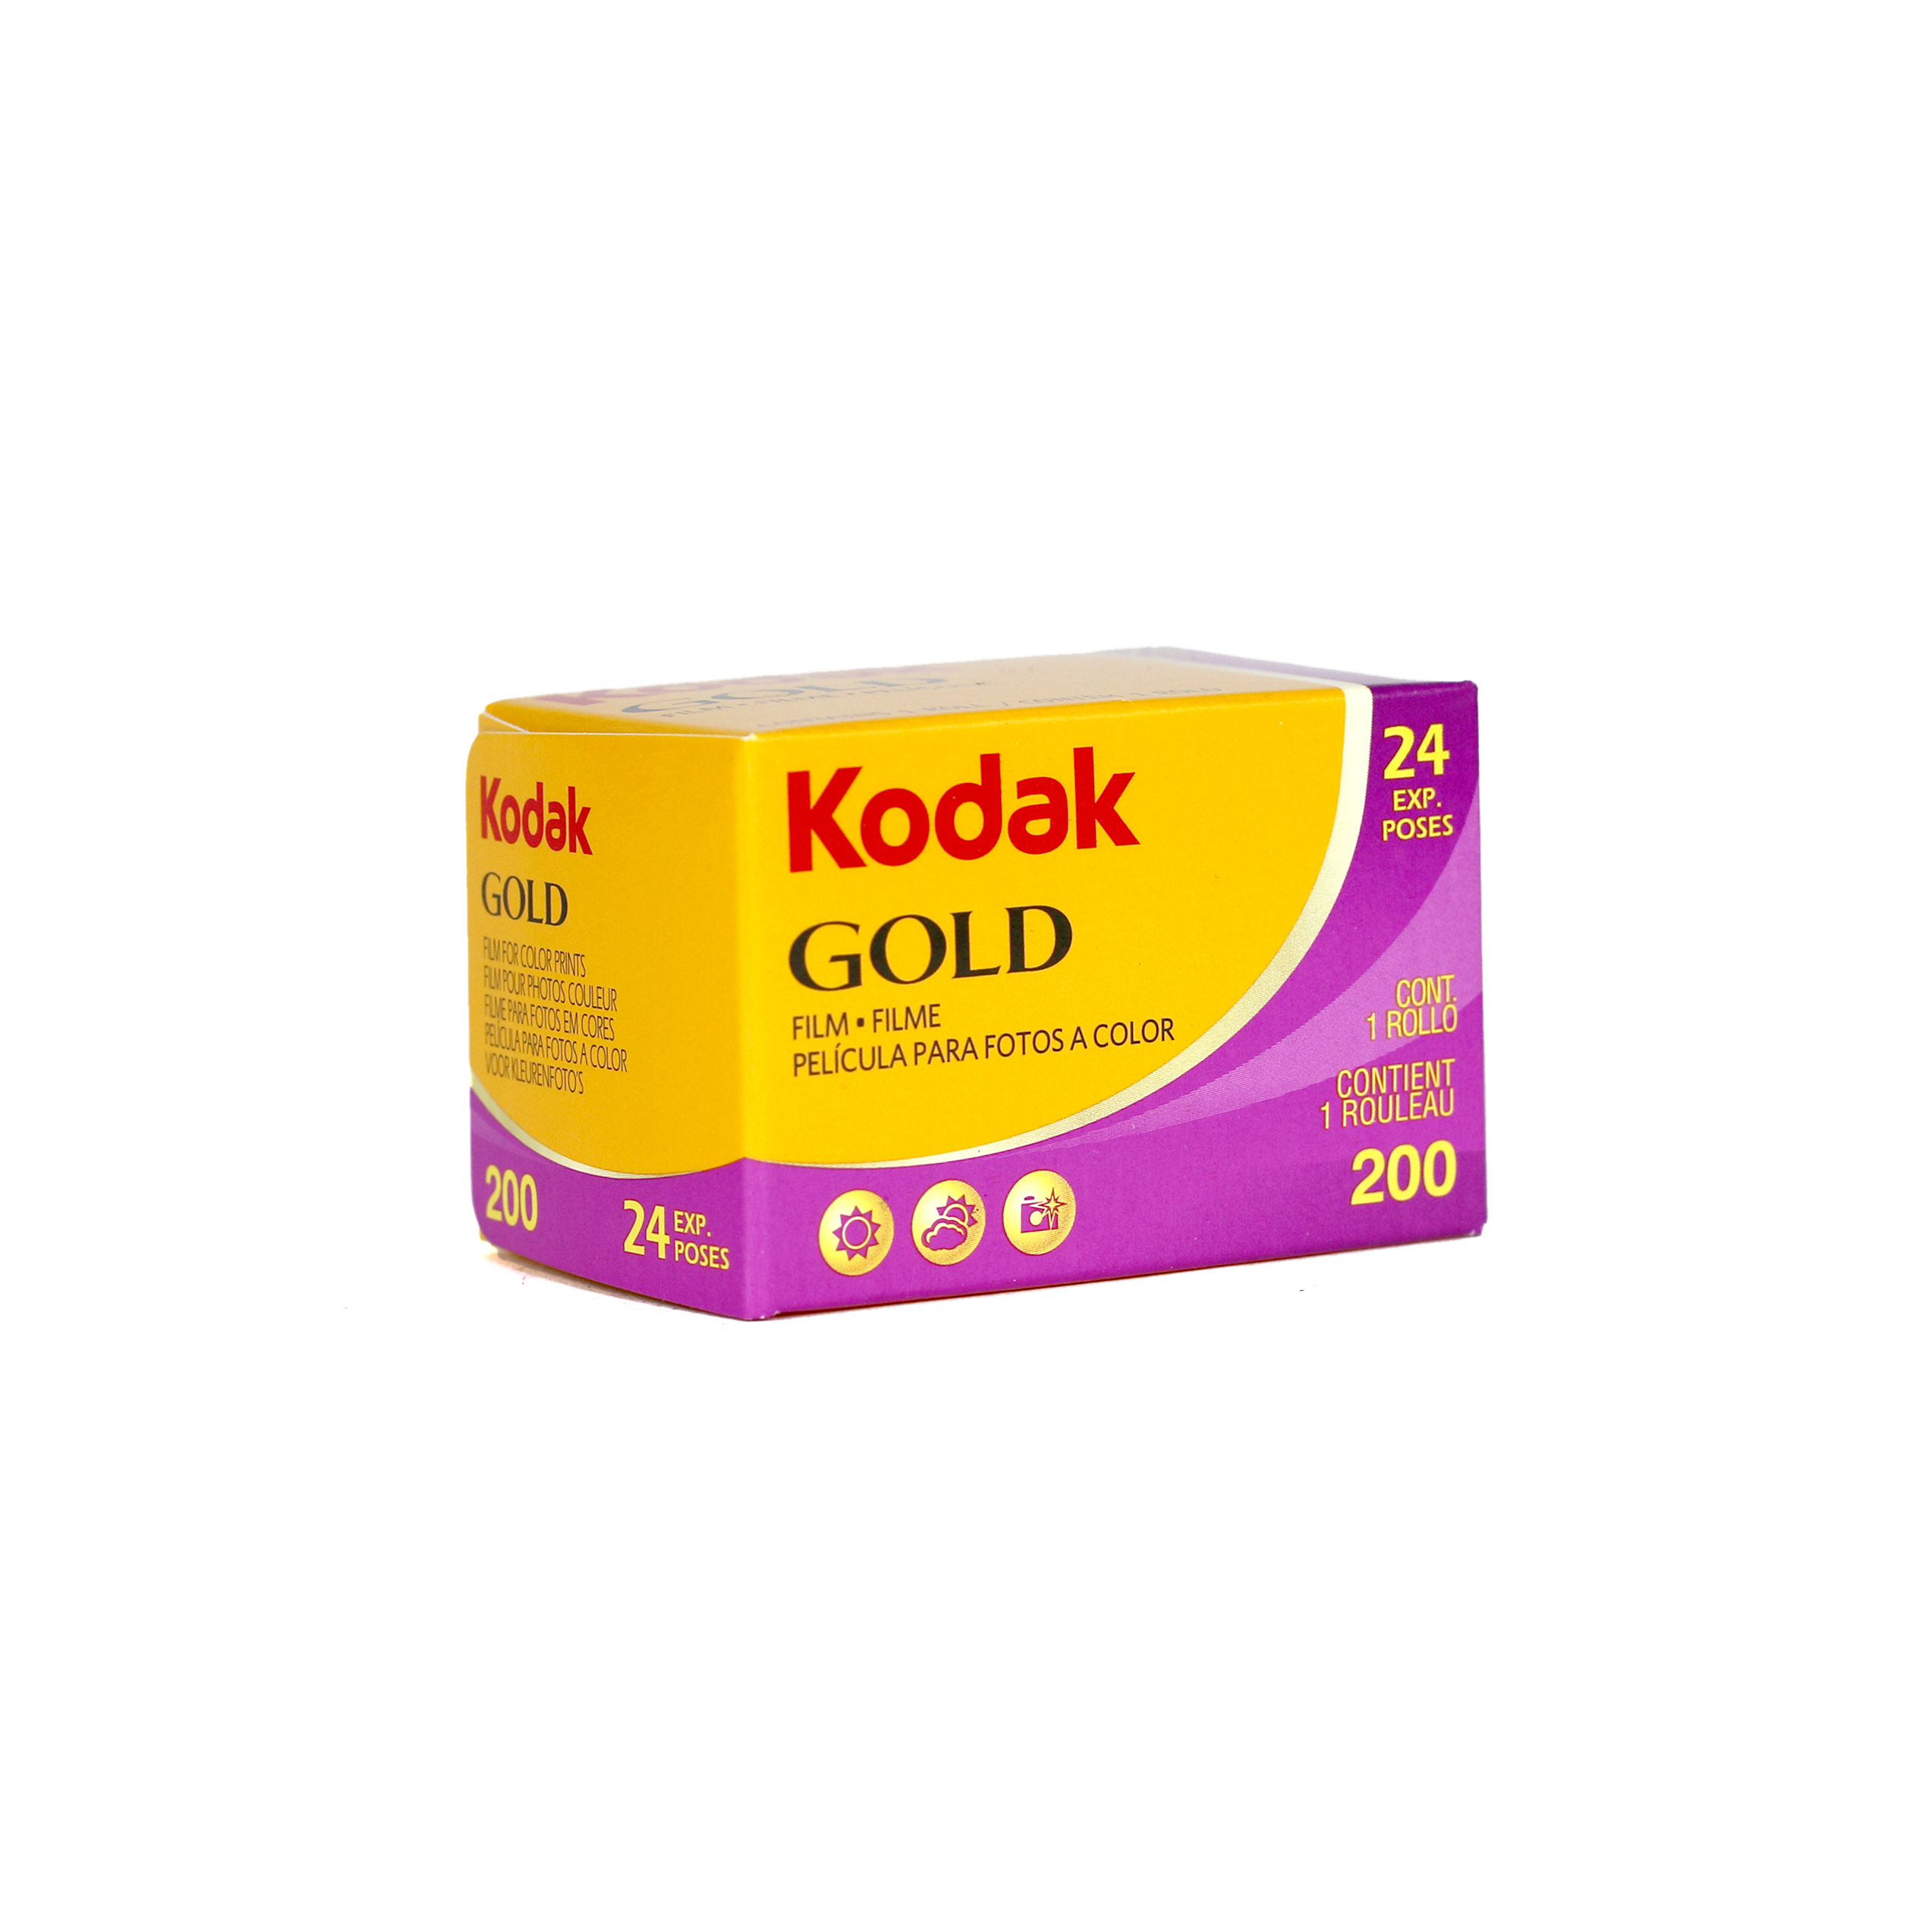 Kodak Gold - 200 - 24 exp 35mm Film